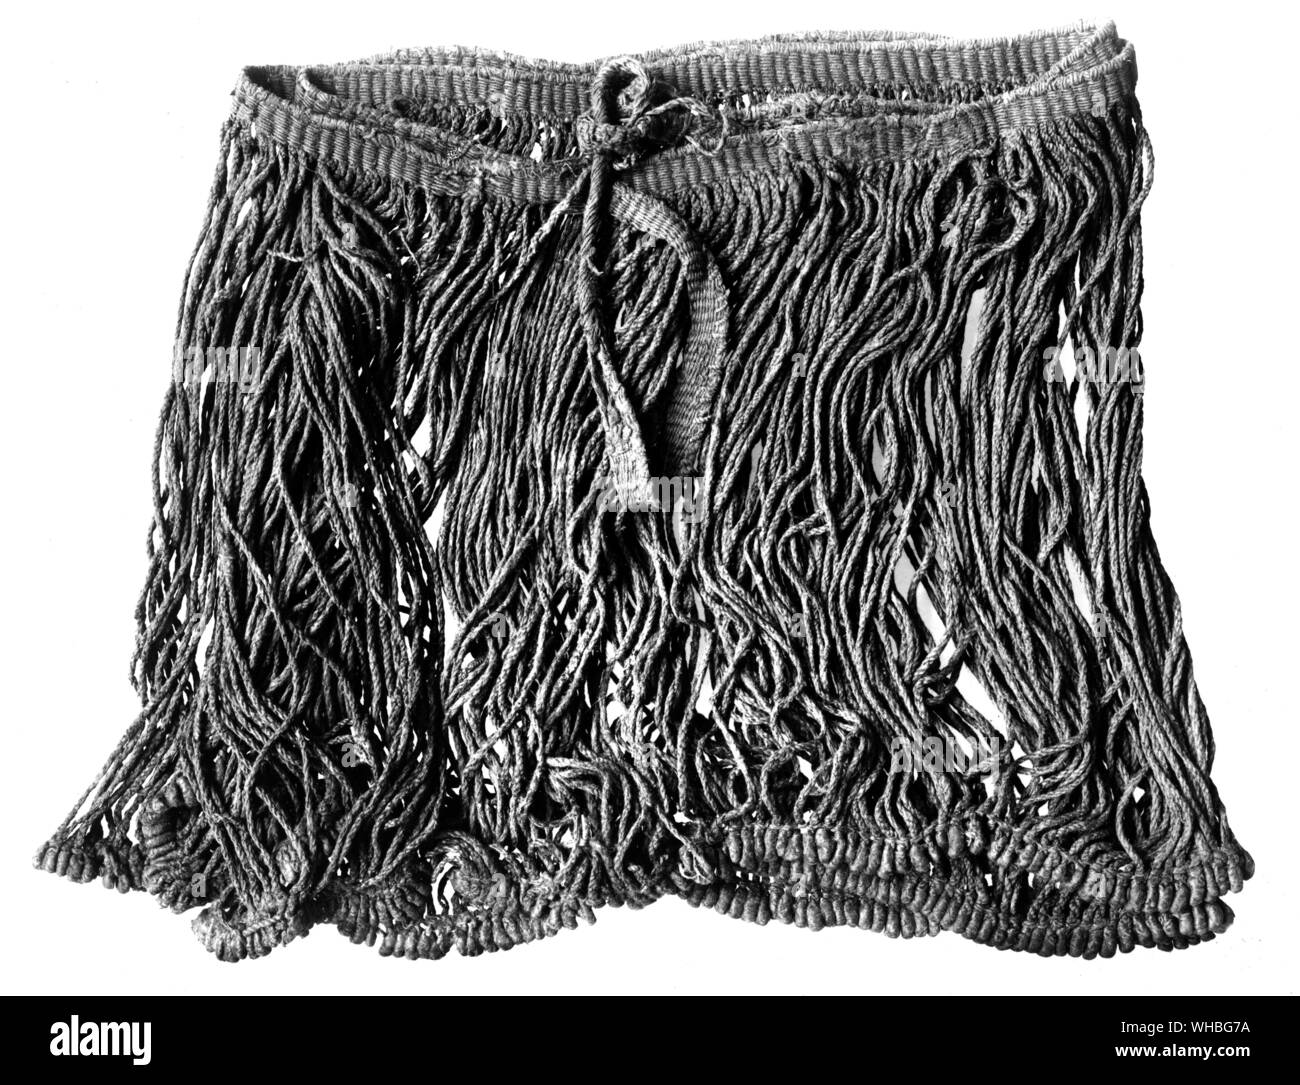 La falda del cable desde el ataúd de roble Eglved grave en 1300 A.C. Foto de stock